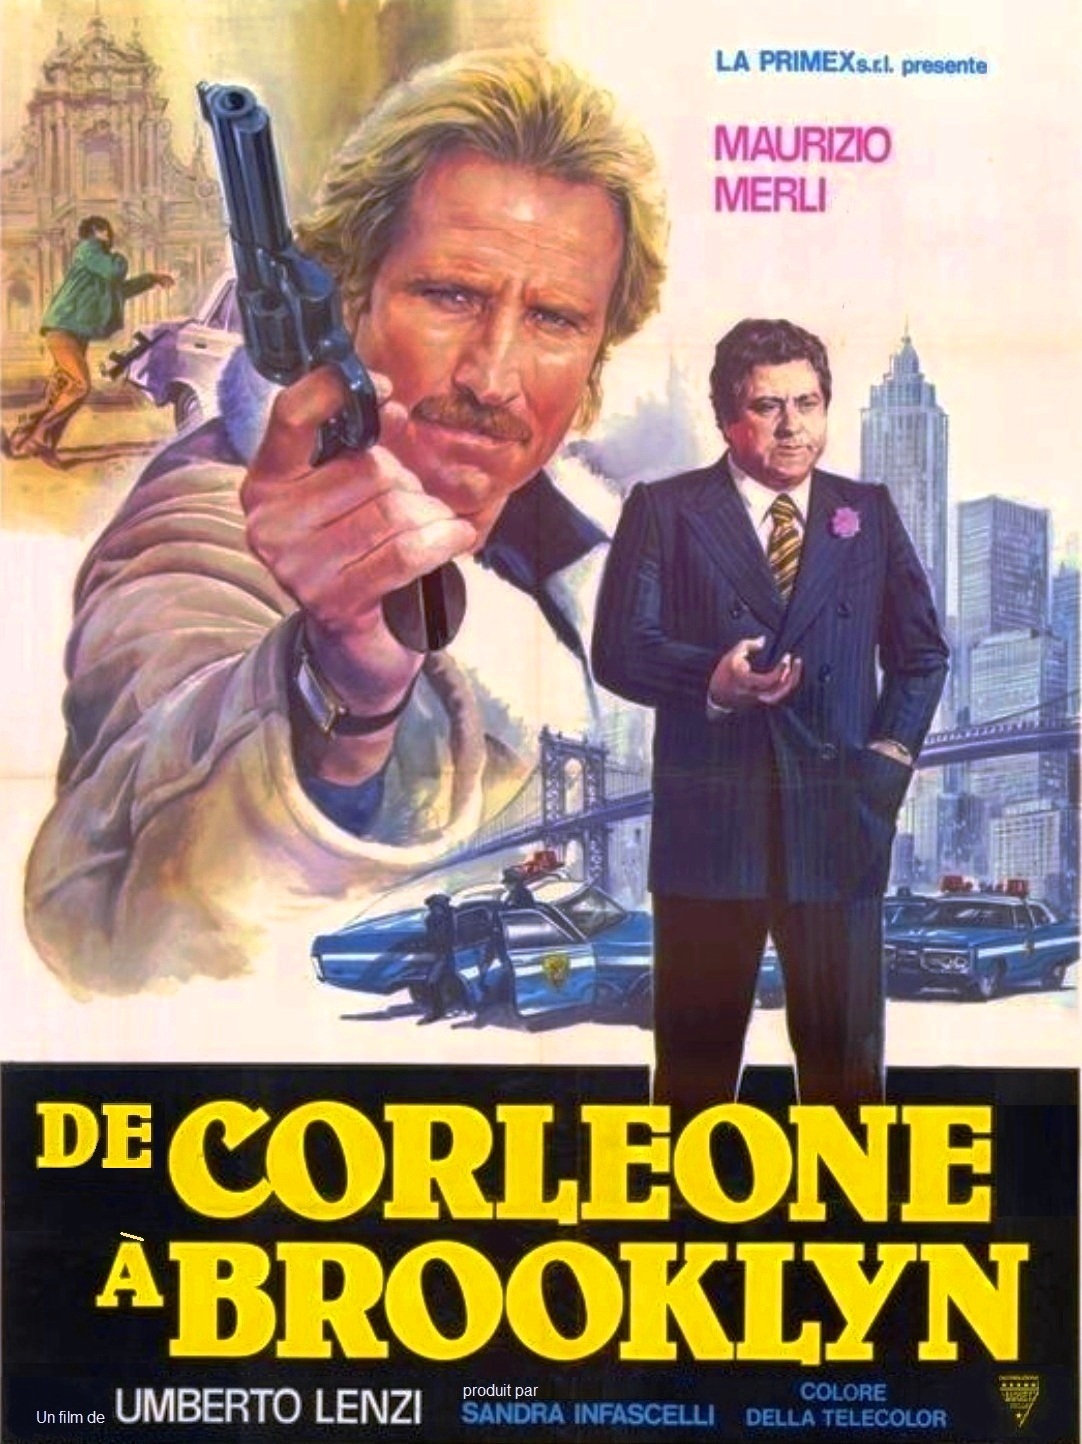 From Corleone to Brooklyn (1979) Screenshot 4